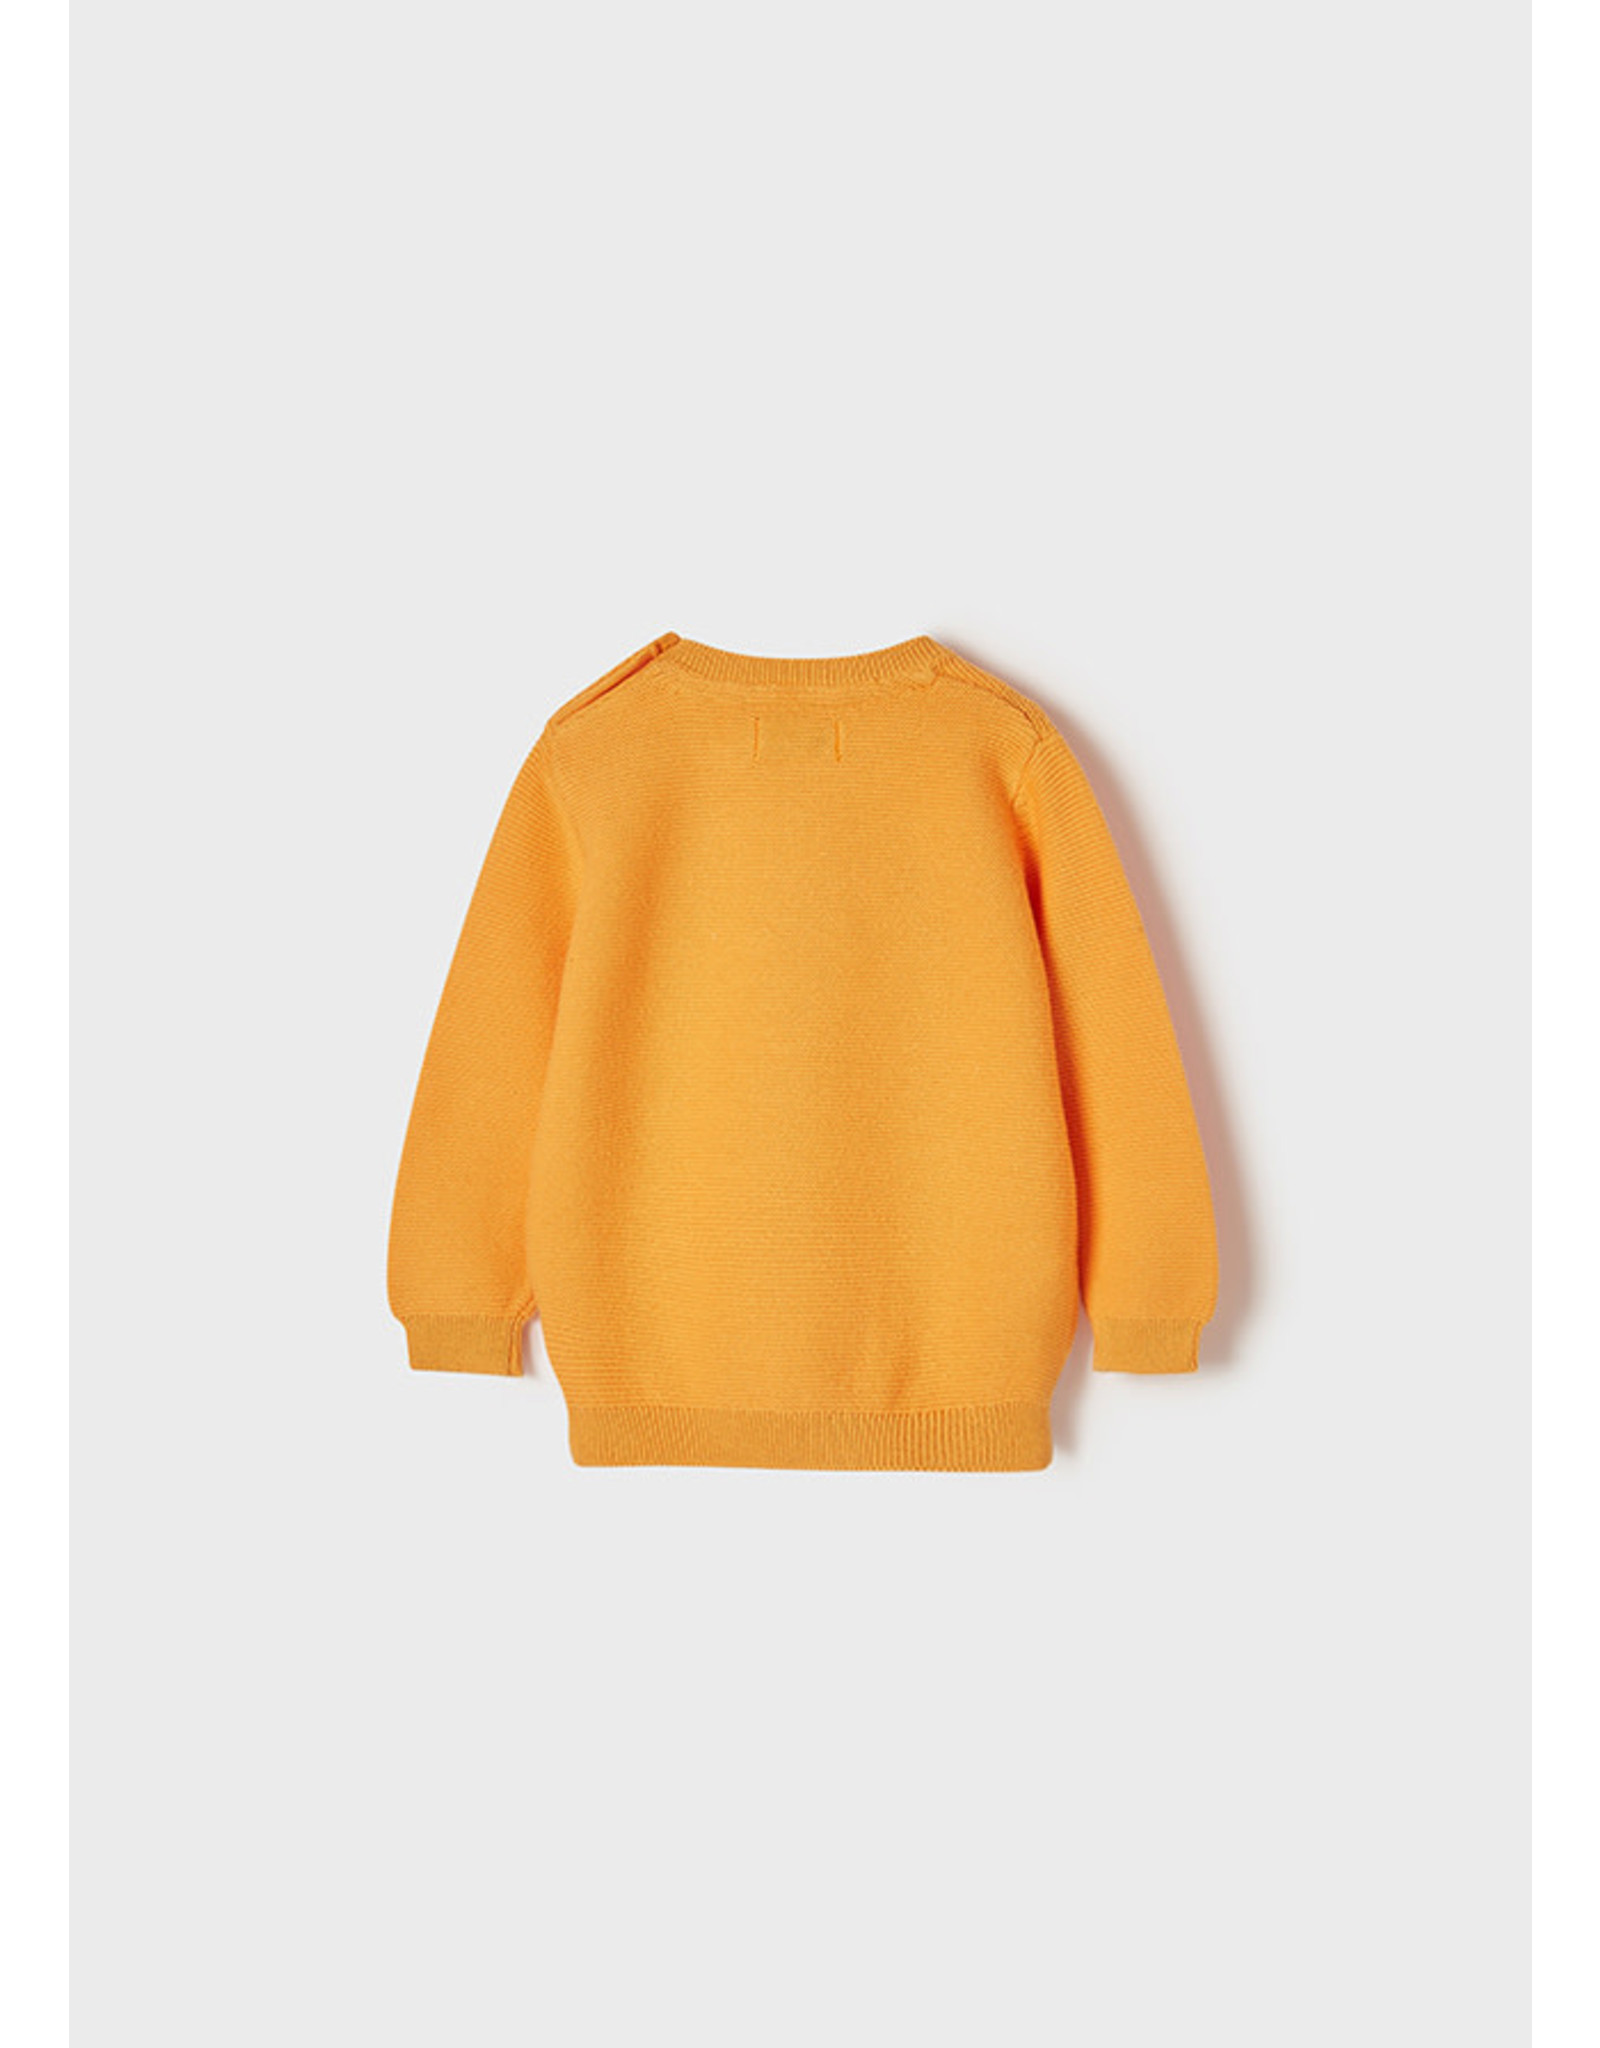 Mayoral Tangerine Cotton Sweater